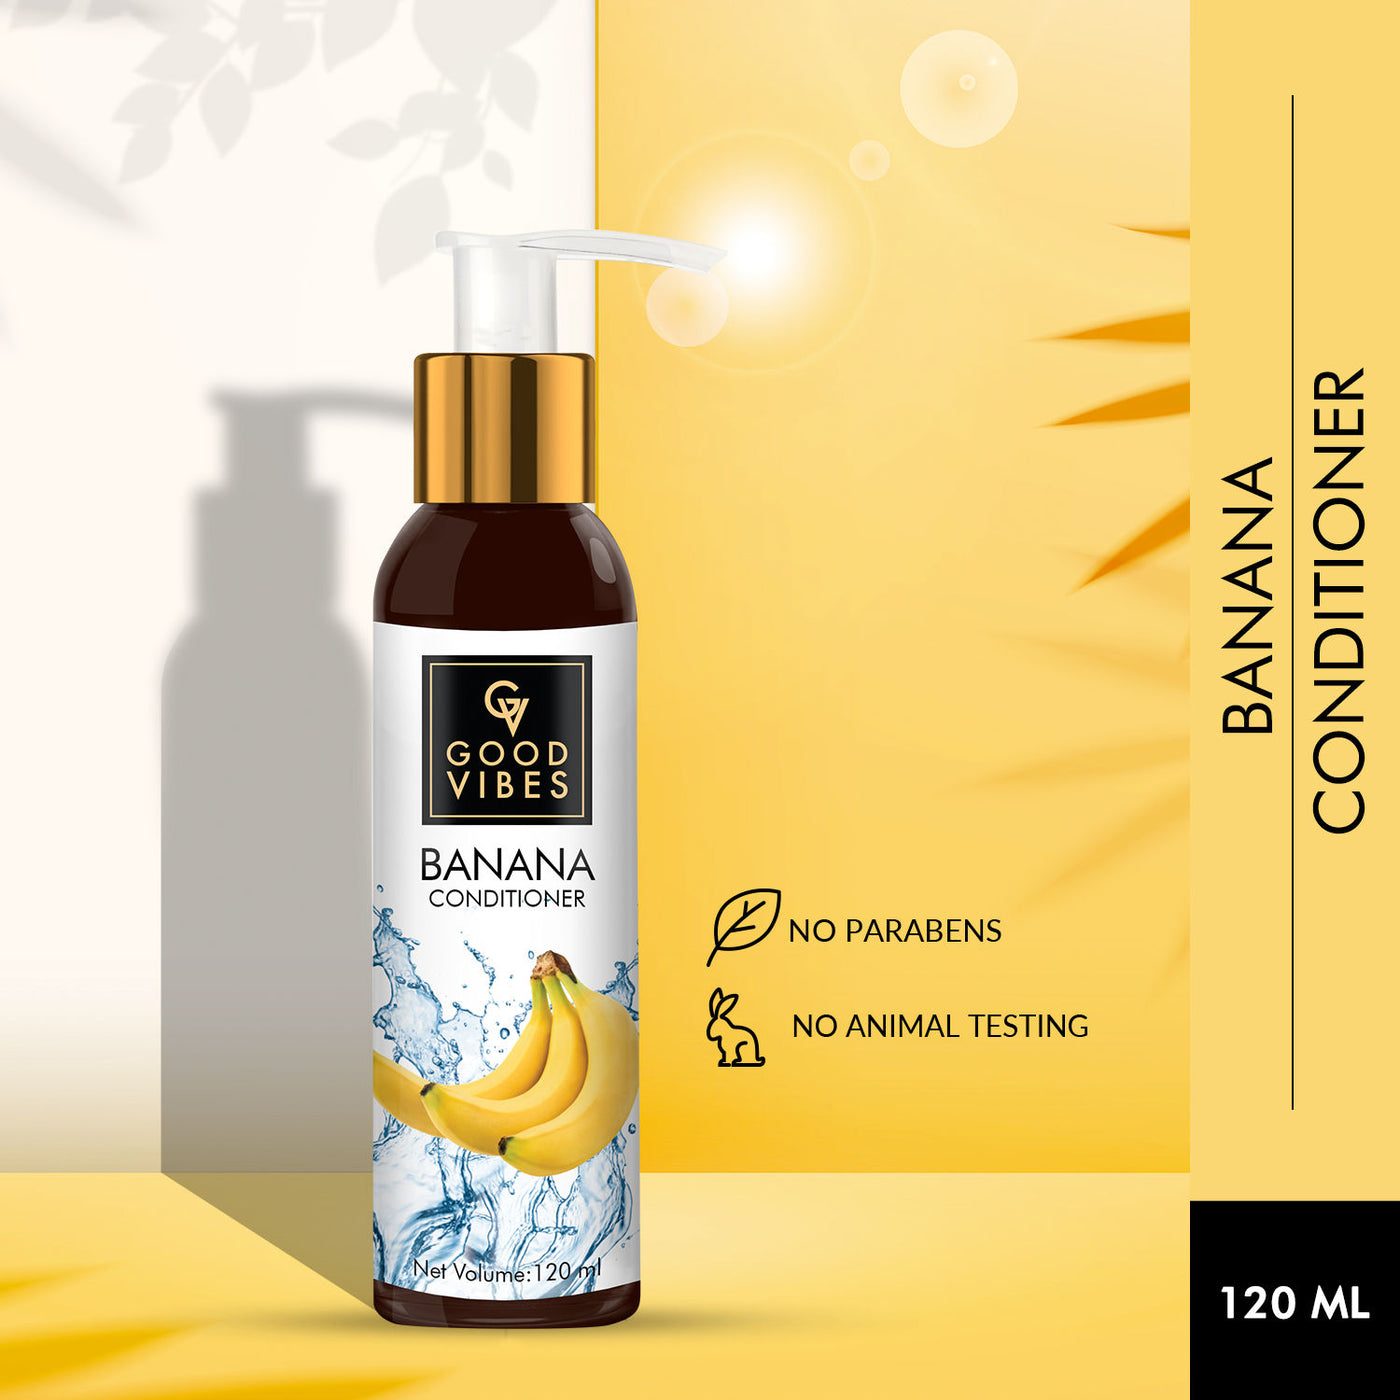 Good Vibes Conditioner - Banana (120 ml) - 1